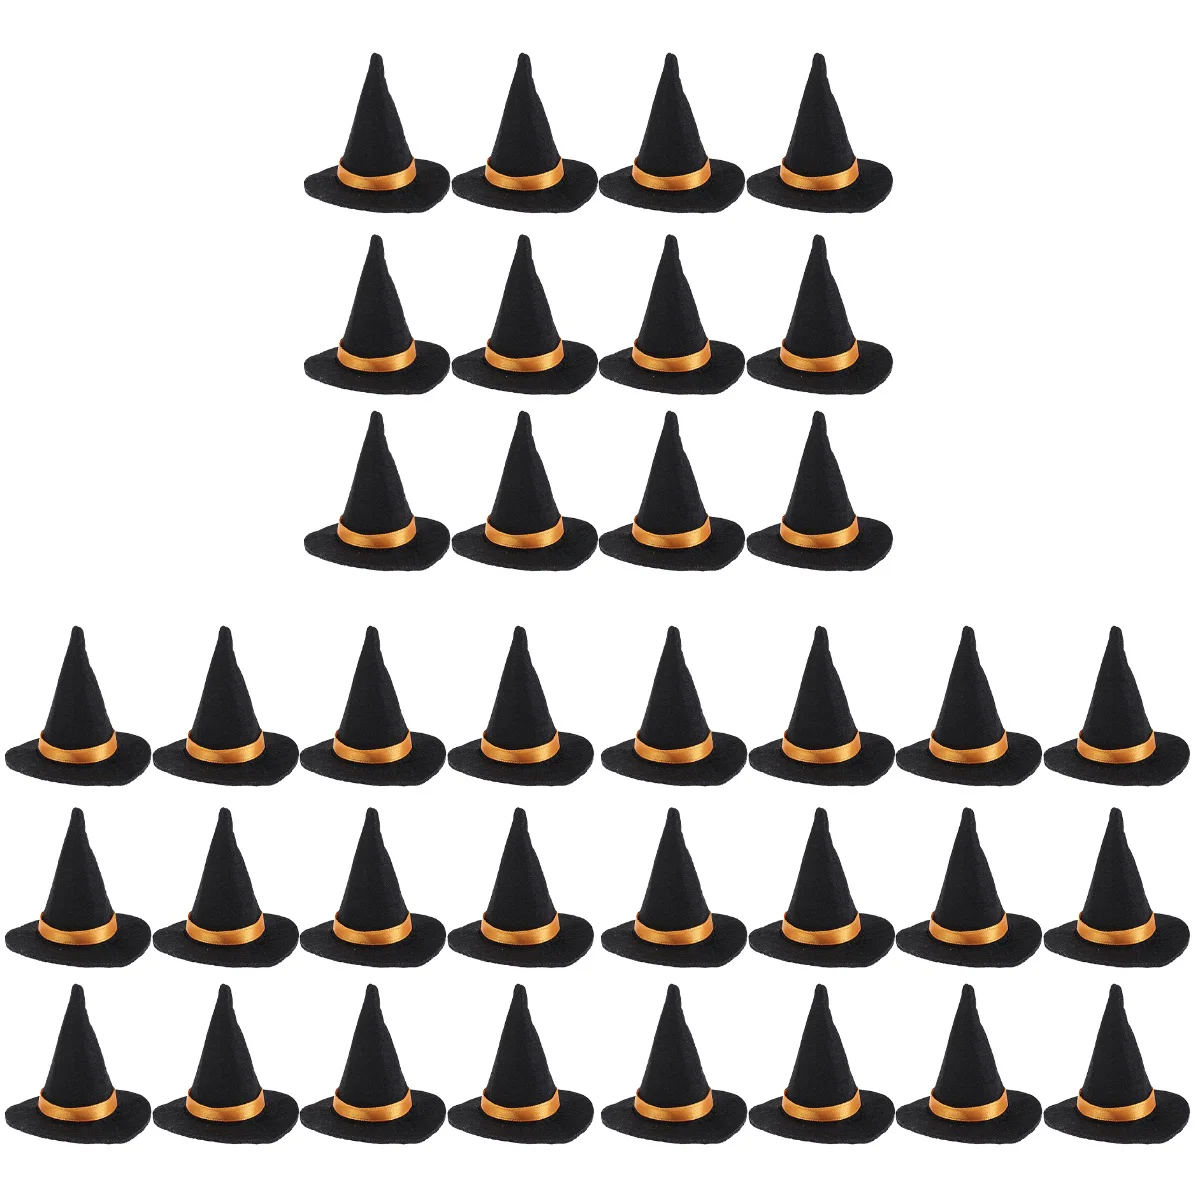 

36 Pcs Mini Witch Hat Halloween Decorative Props Bottle Cover Dinner Table Party Favors Felt Cloth Caps Bottles